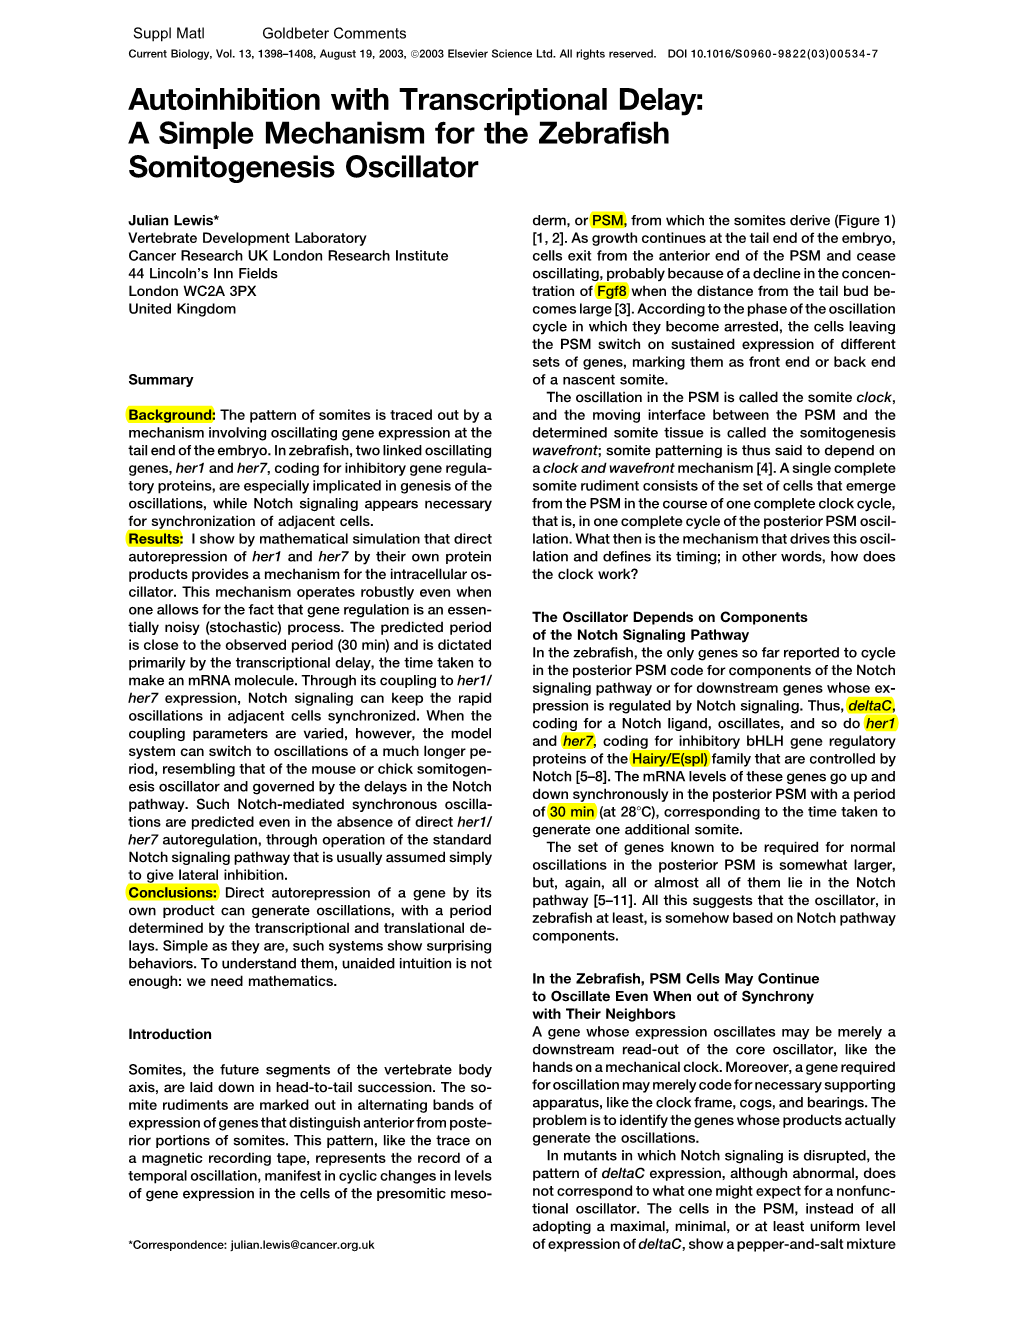 A Simple Mechanism for the Zebrafish Somitogenesis Oscillator